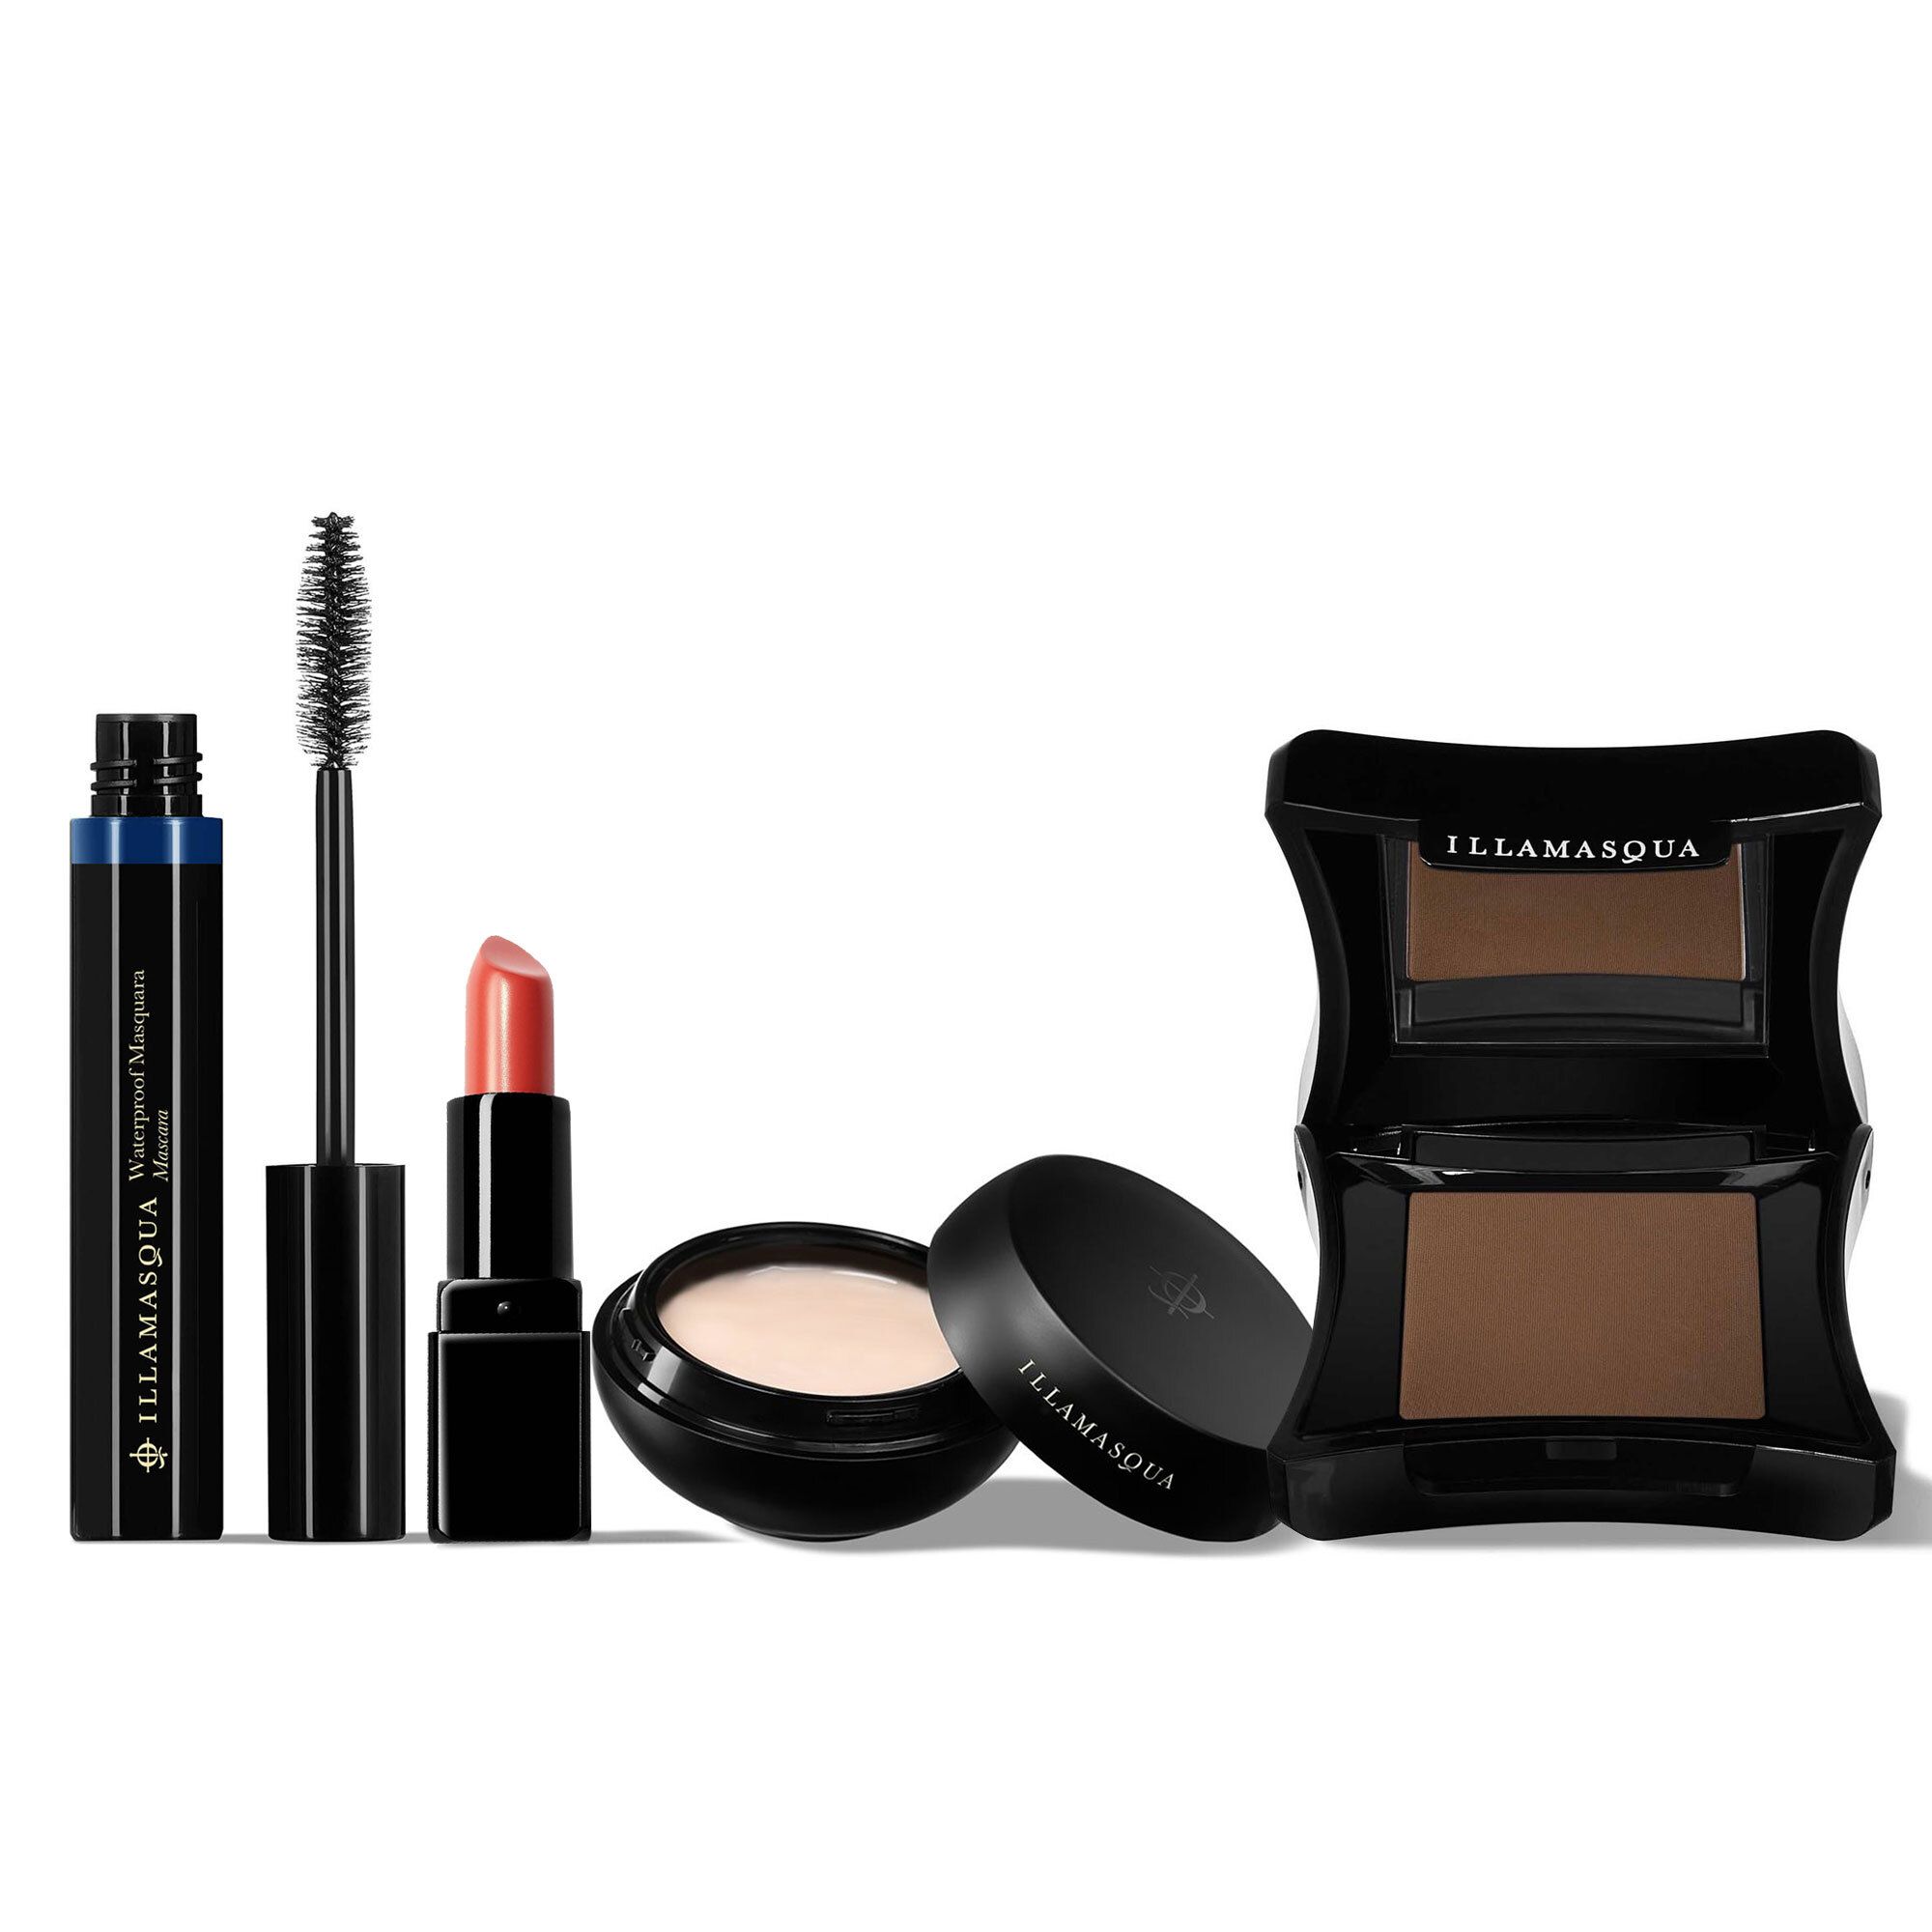 Image of Kit make-up: primer, cipria, mascara e rossetto